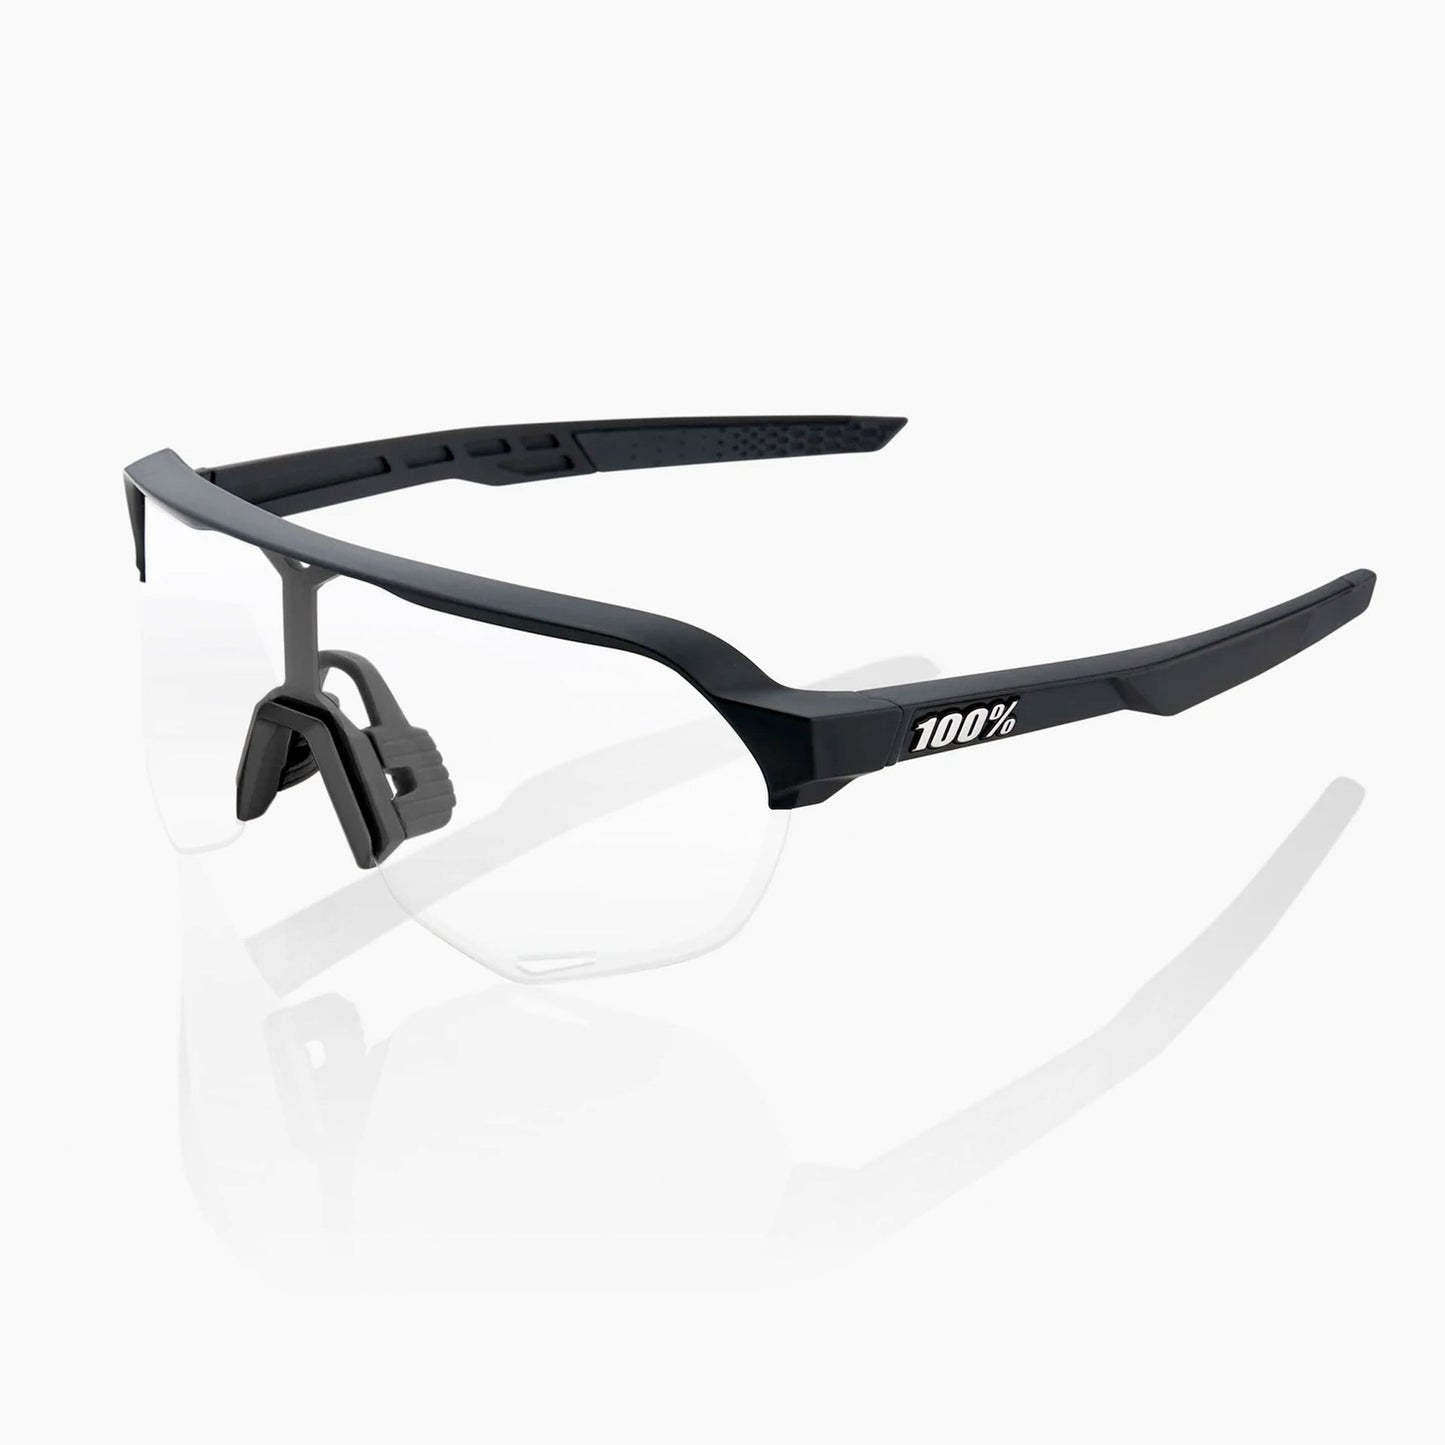 100% S2 Unisex Cycling Sunglasses Soft Tact Black, Smoke Lens + Clear Lens